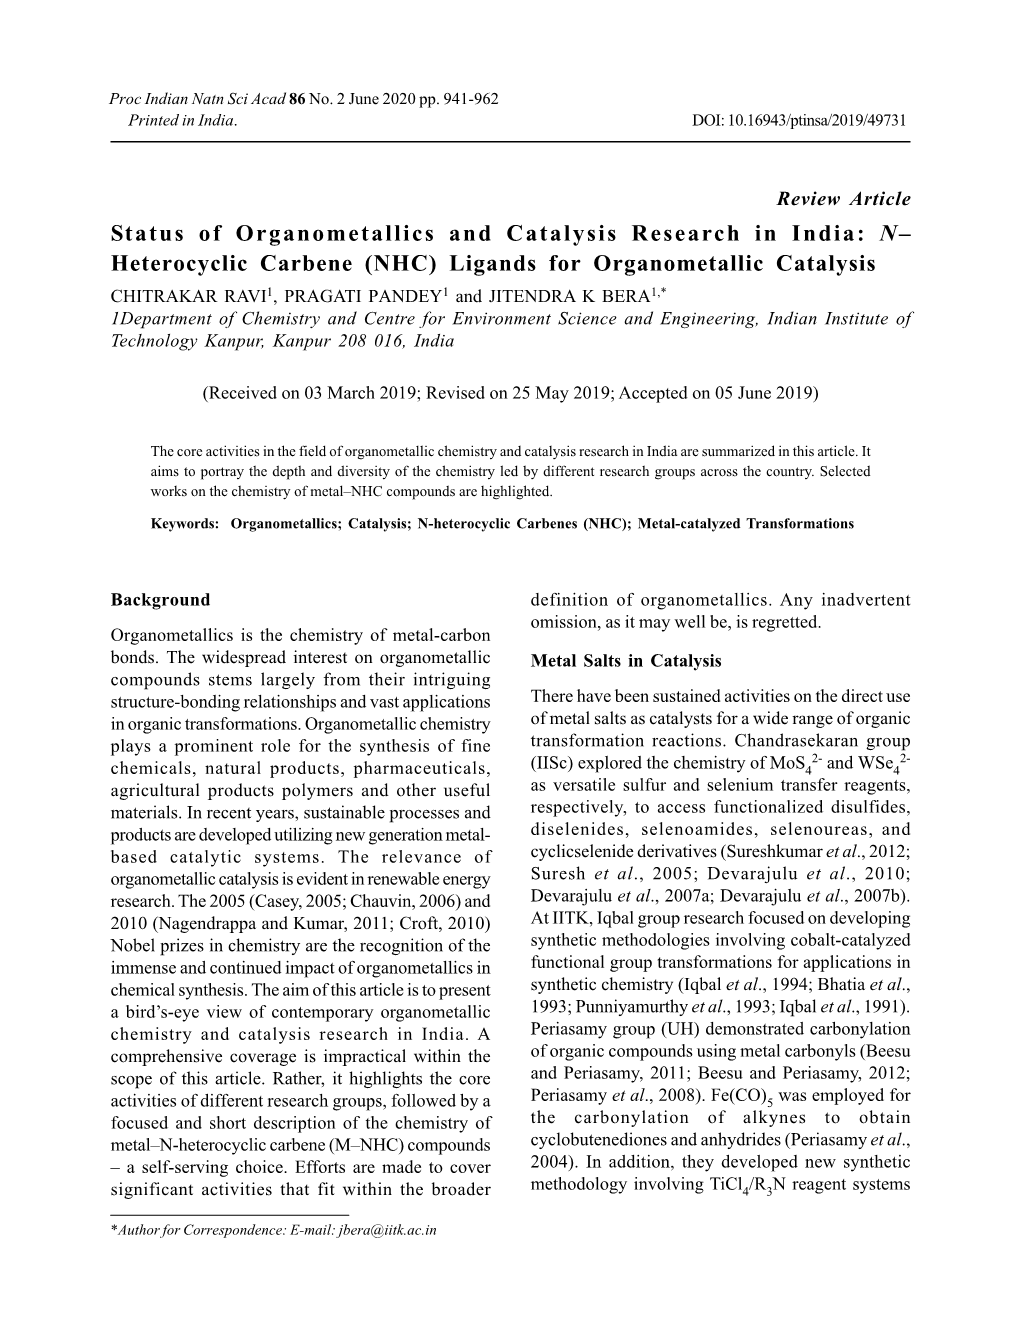 Status of Organometallics and Catalysis Research in India: N–Heterocyclic Carbene